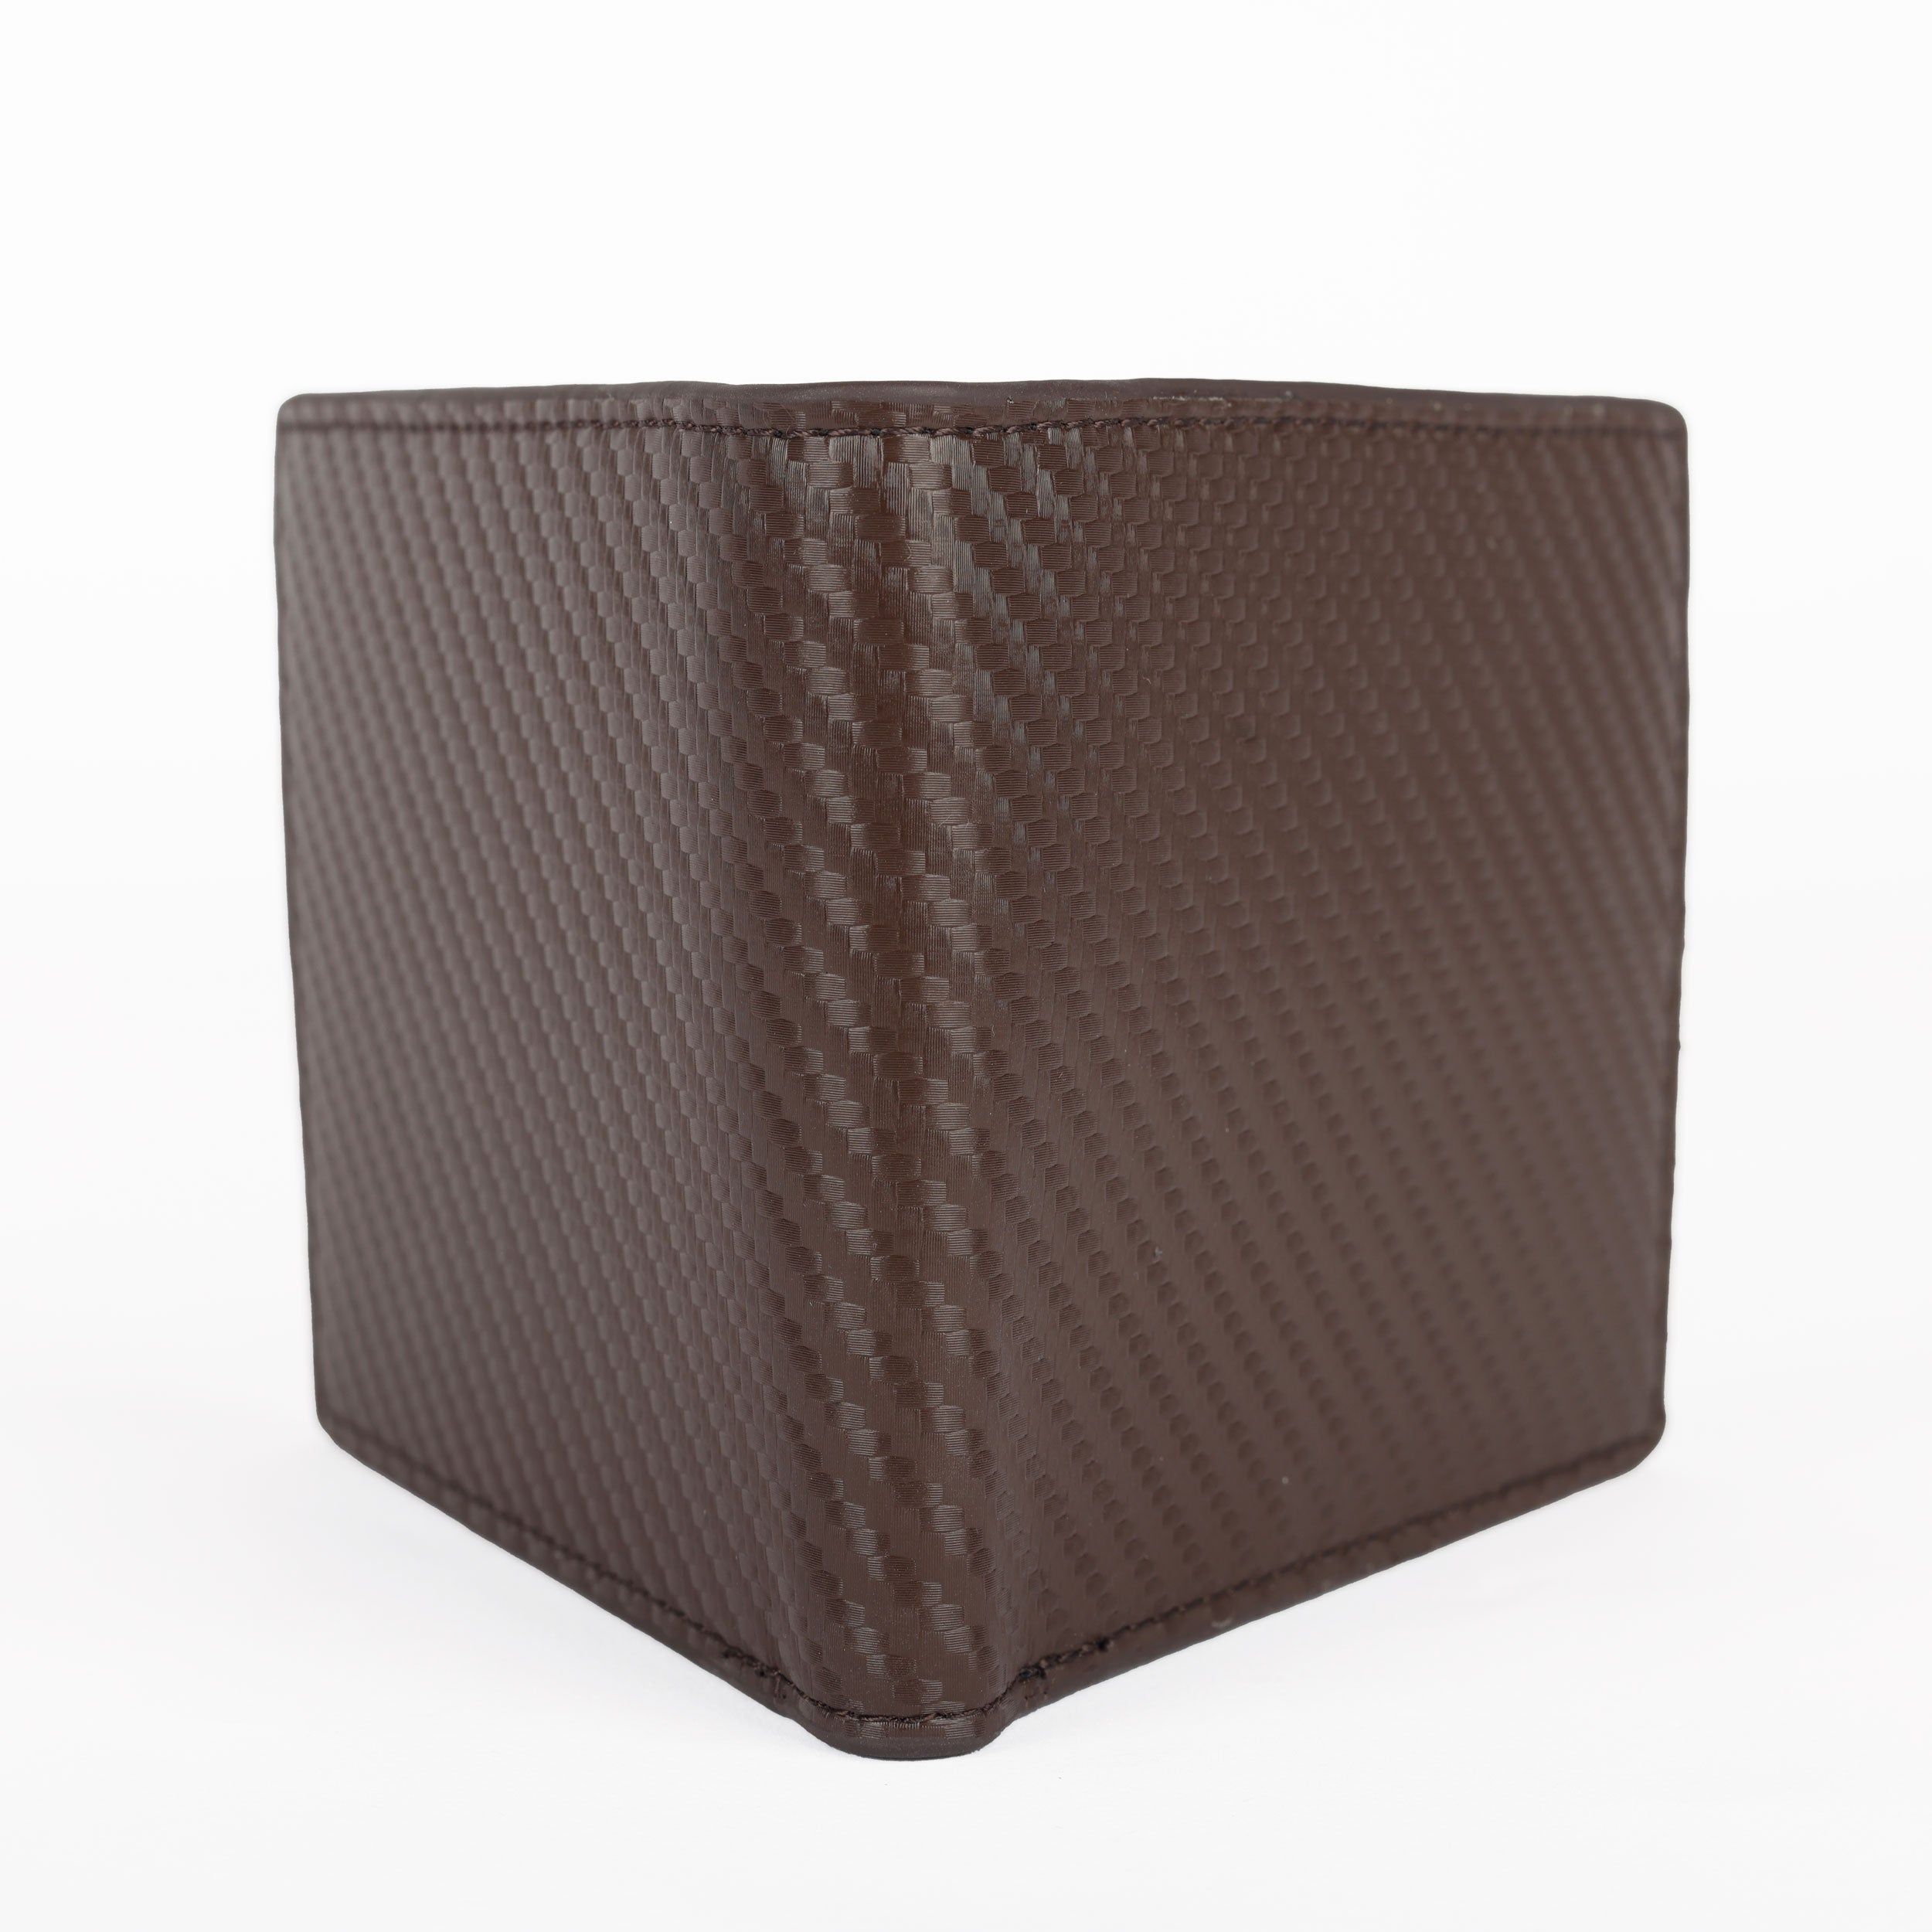 Standard Textured Genuine Leather Wallet